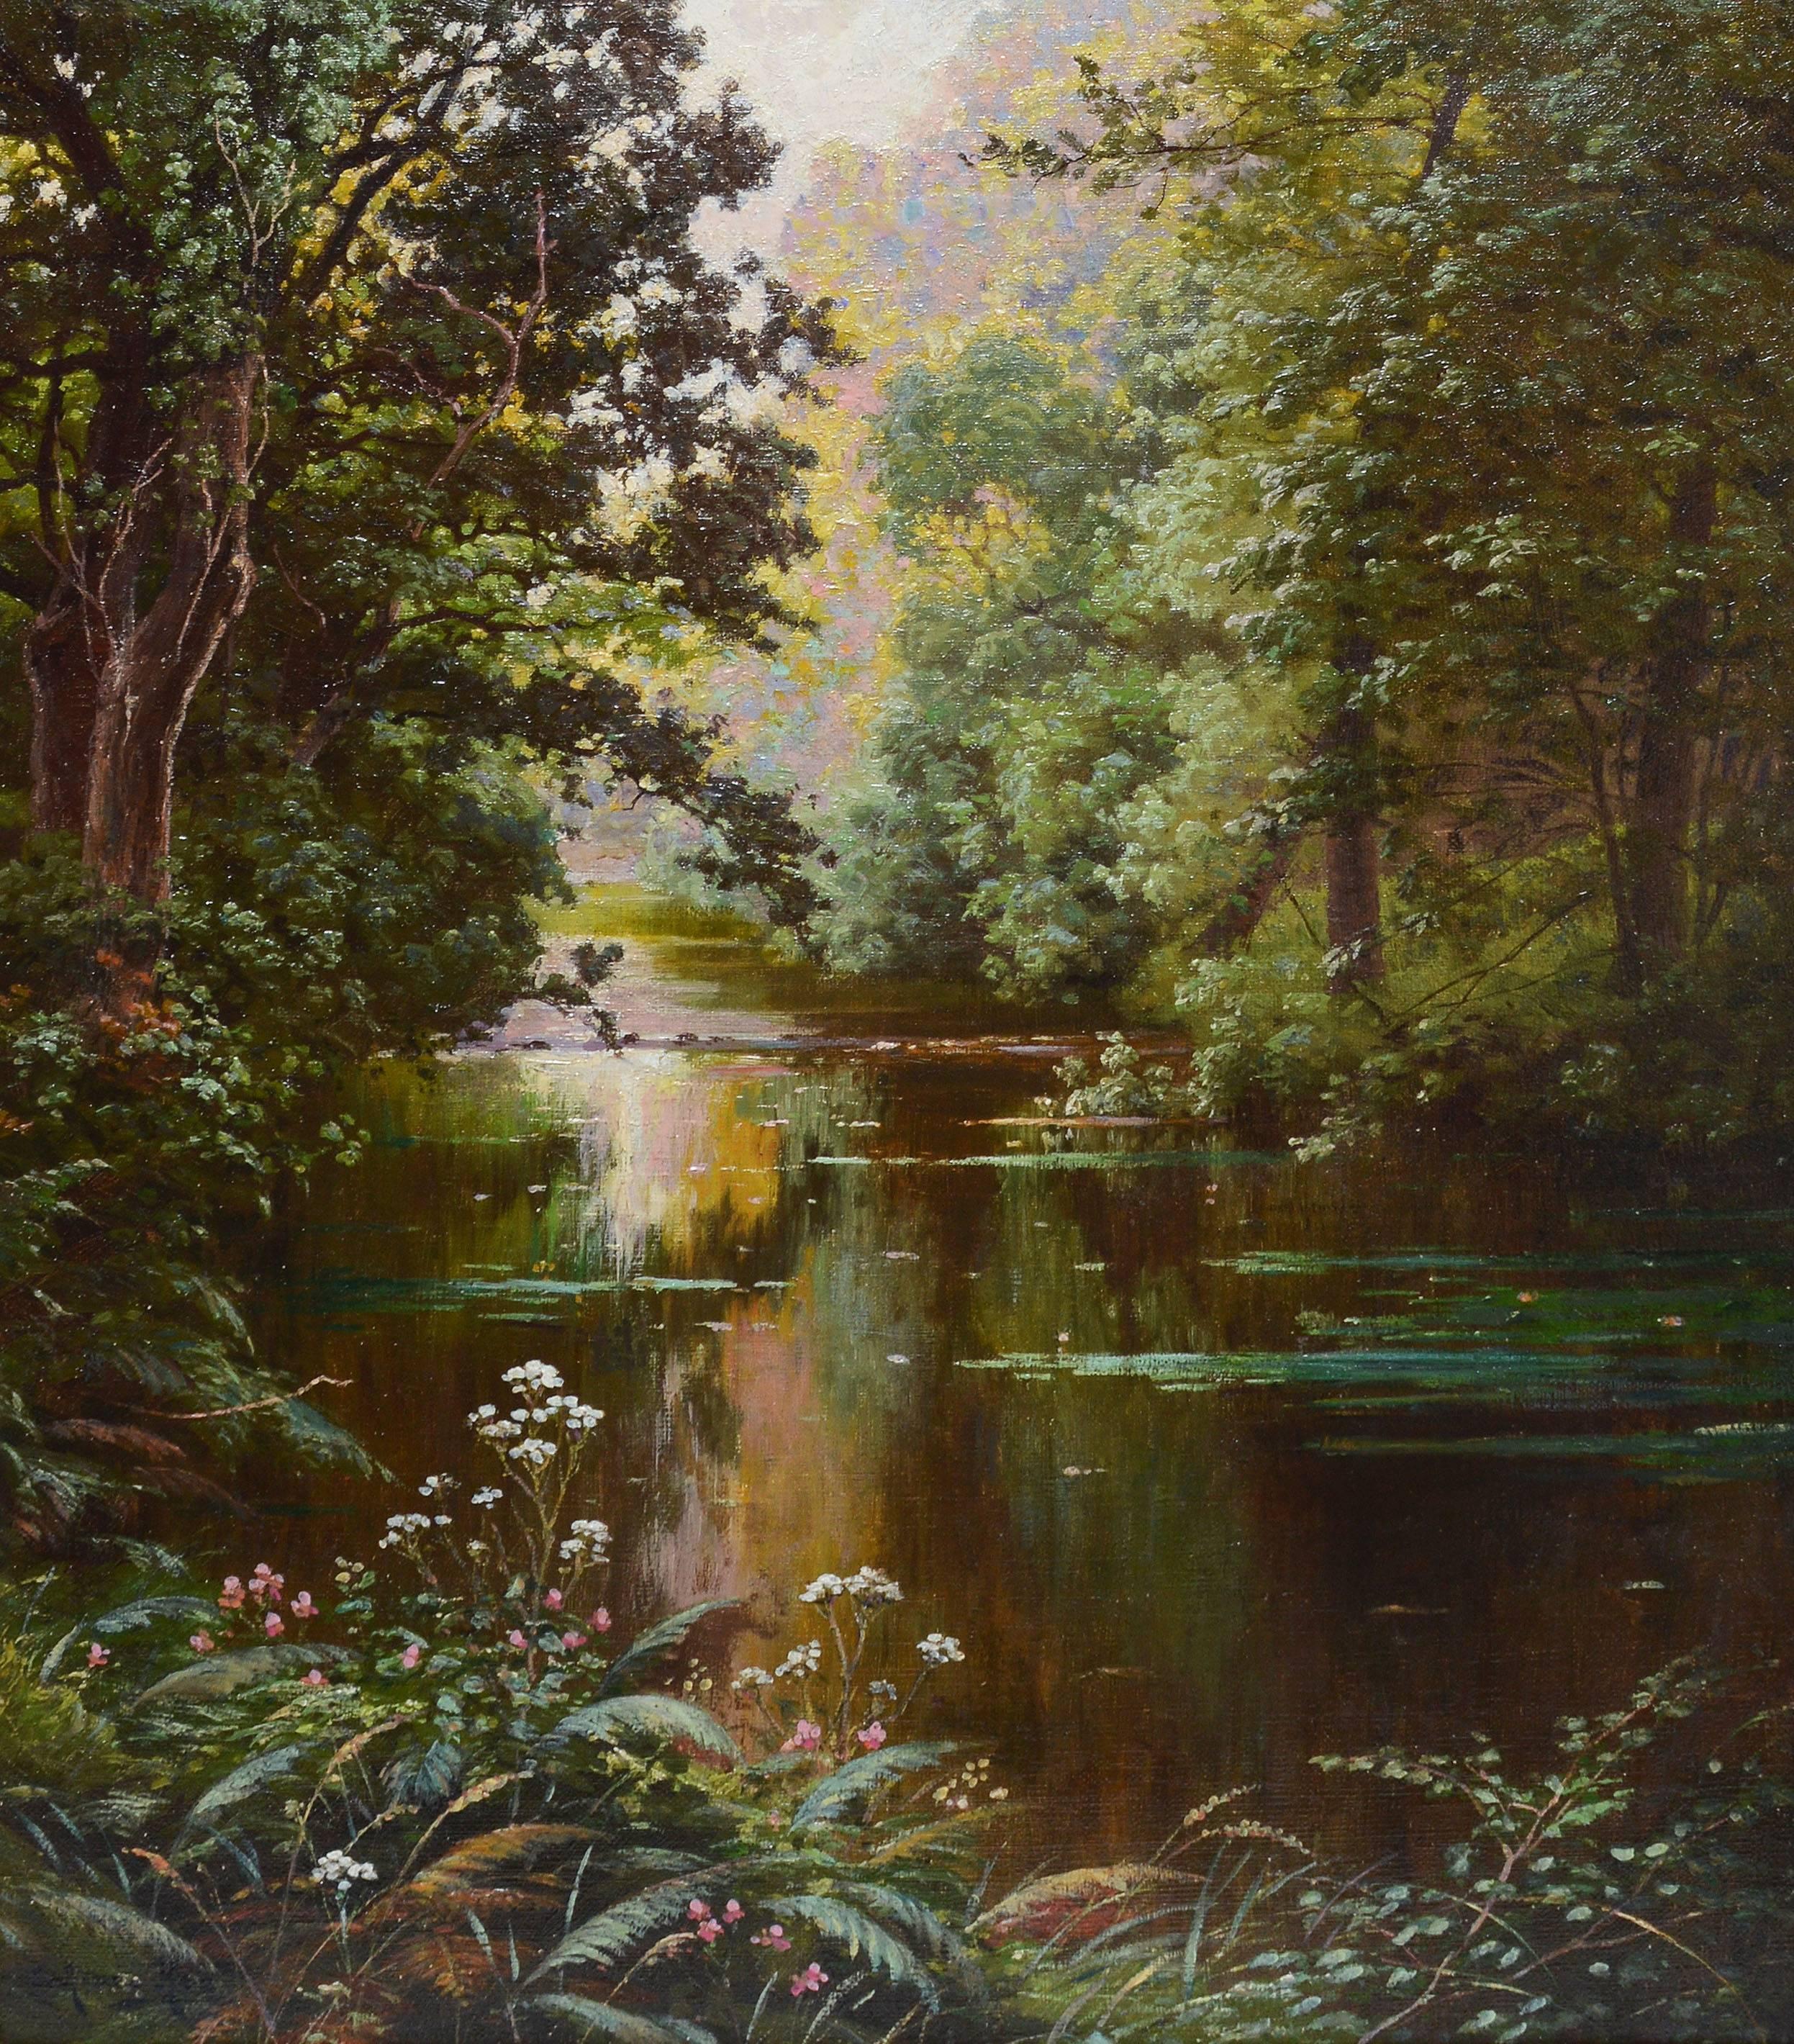 Sunlit River Landscape - Impressionist Painting by Rene His